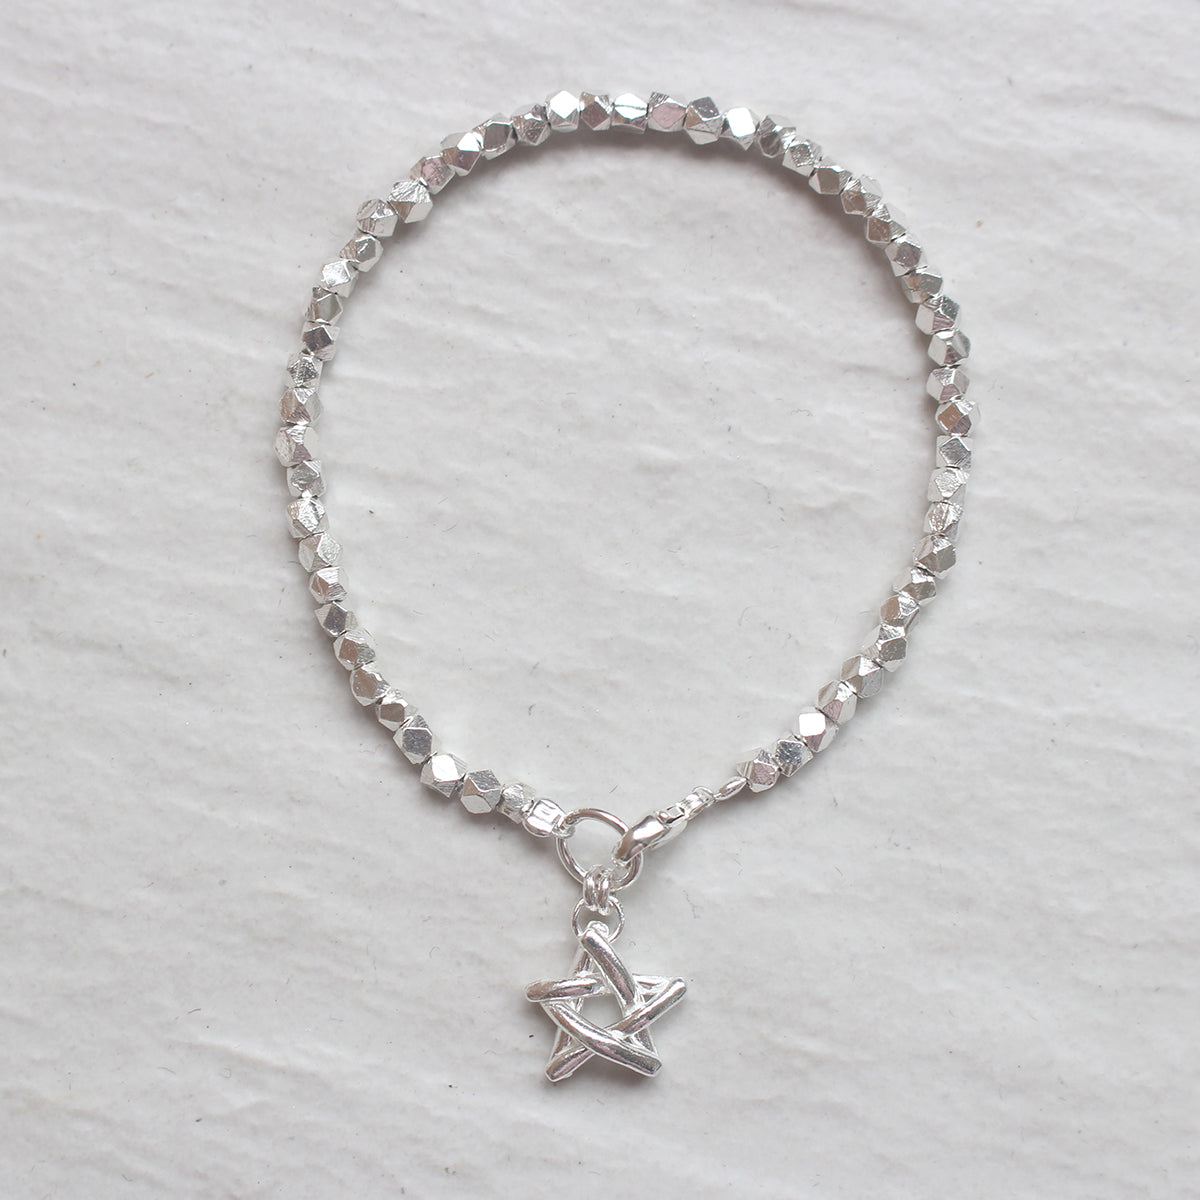 Match Stick Star Bracelet in 925 Sterling Silver